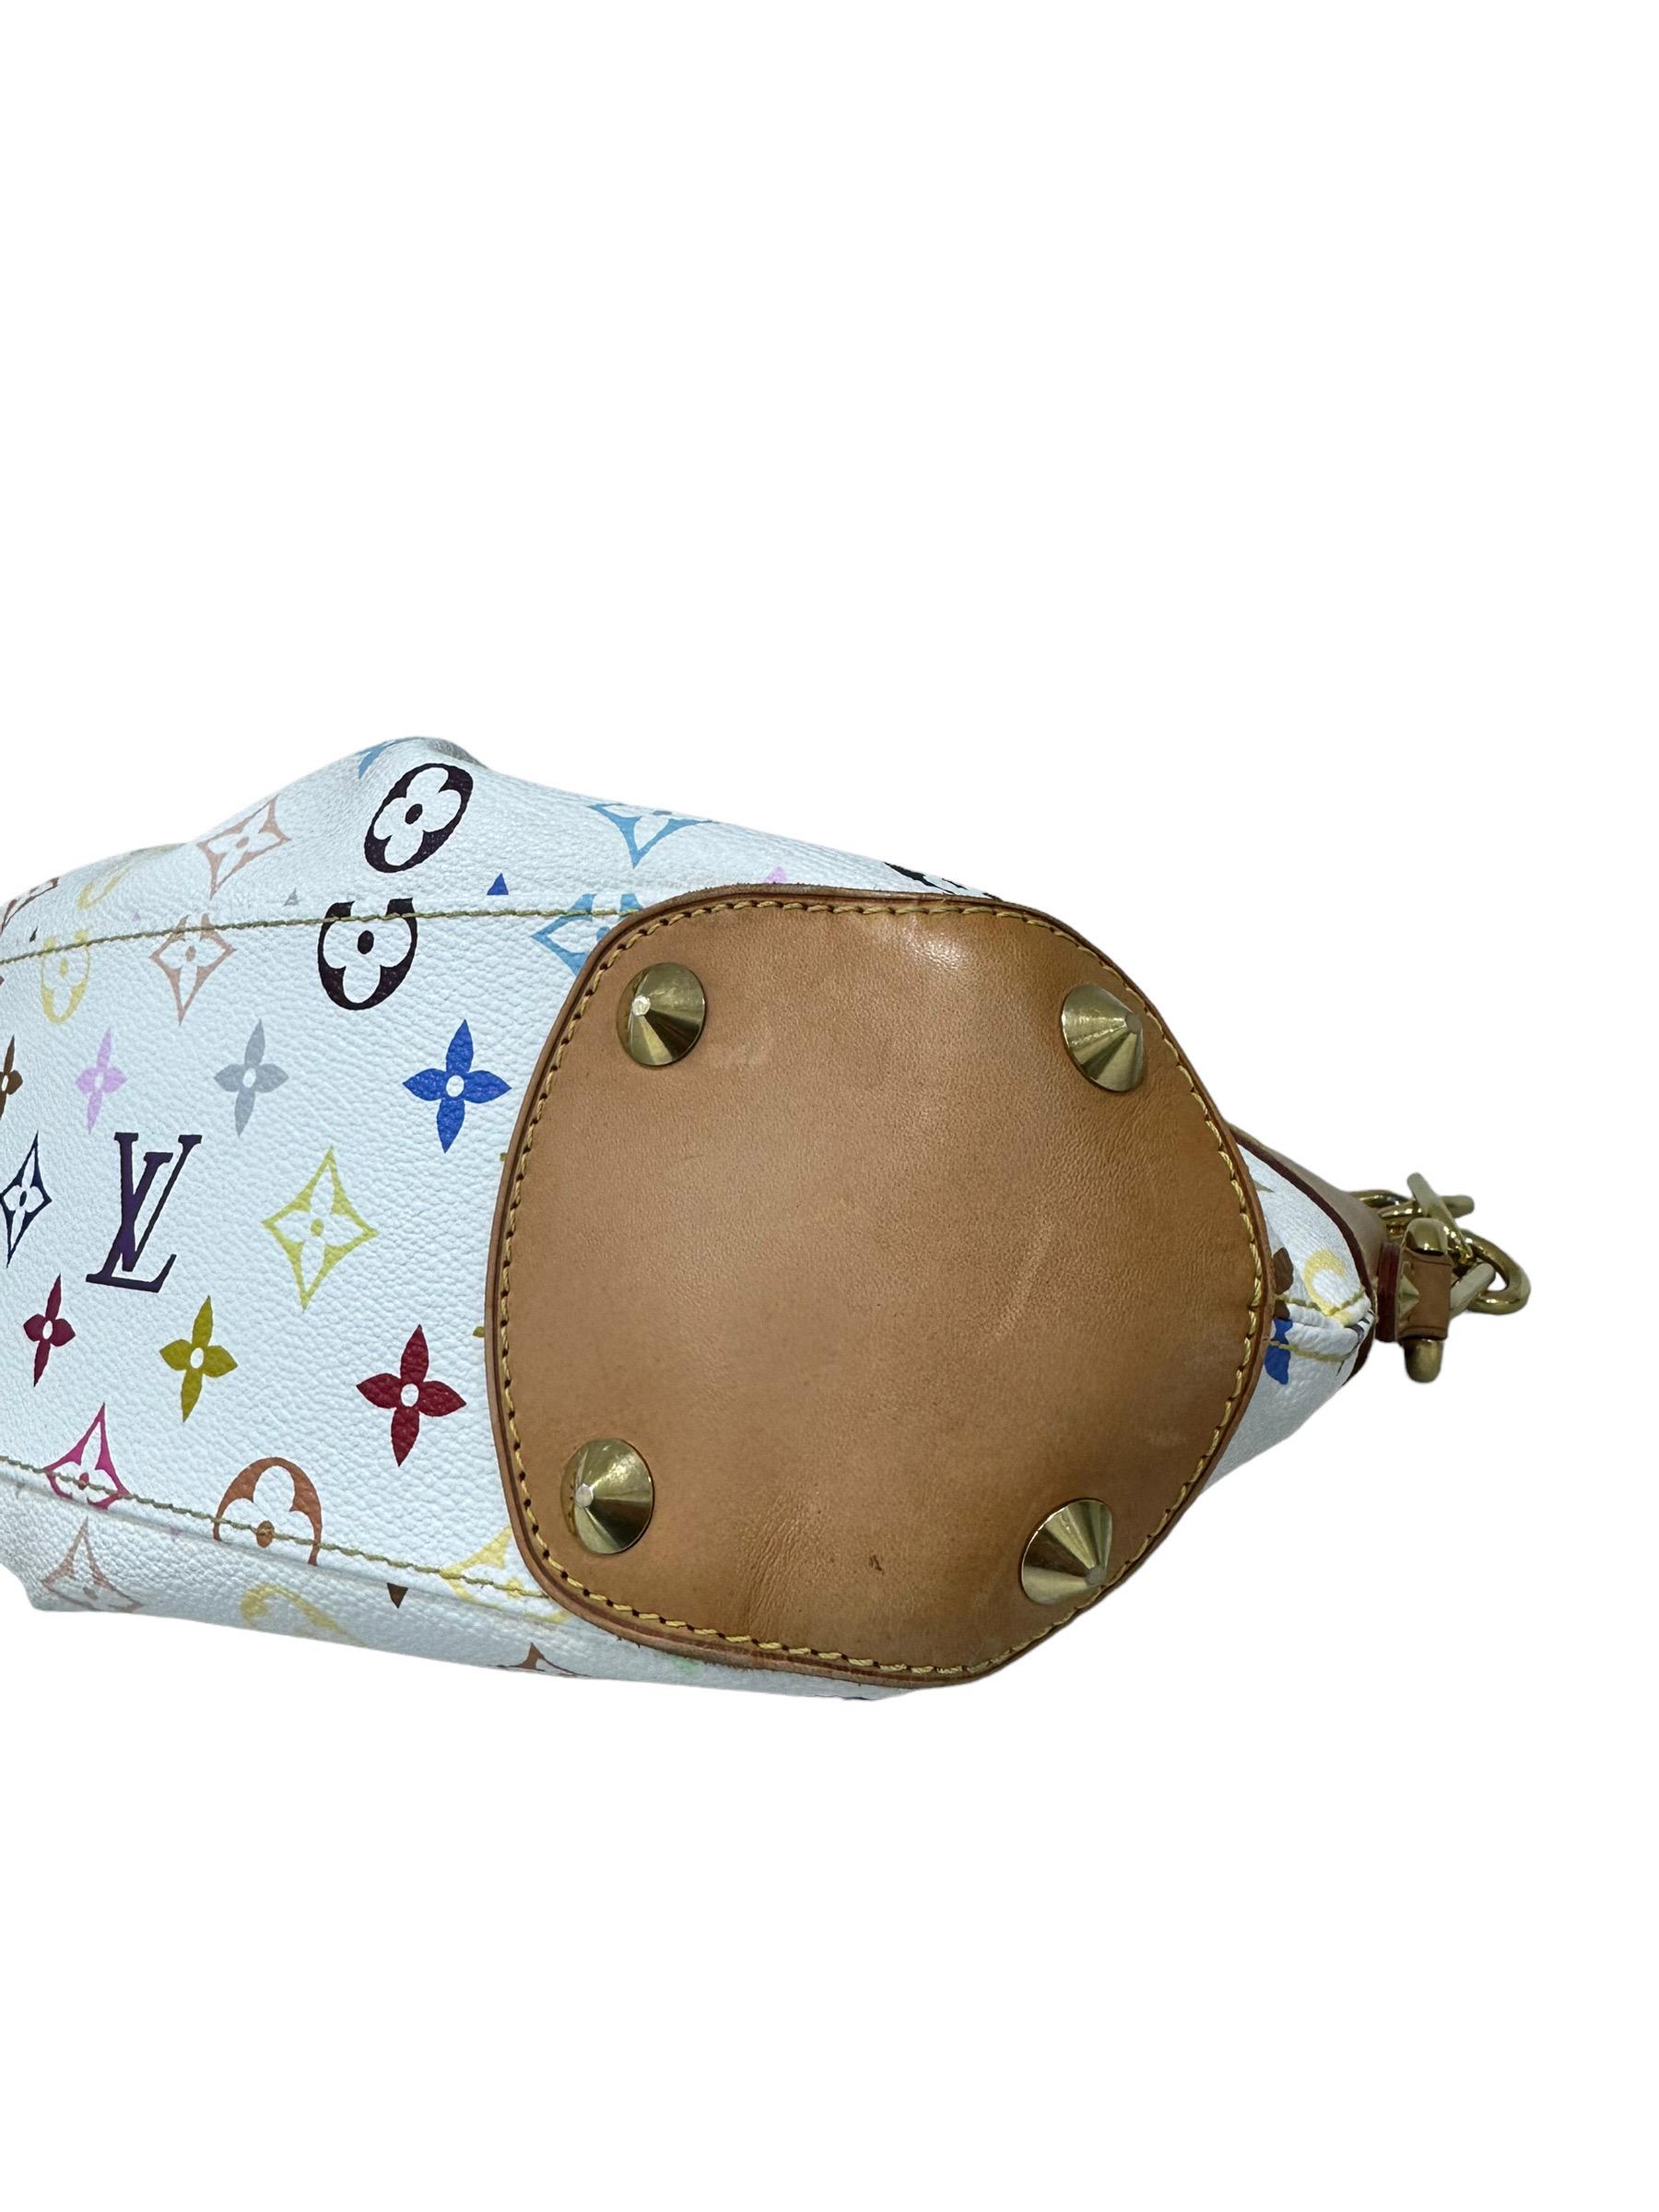 Louis Vuitton x Takashi Murakami Judy PM Limited Edition Shoulder Bag For Sale 2